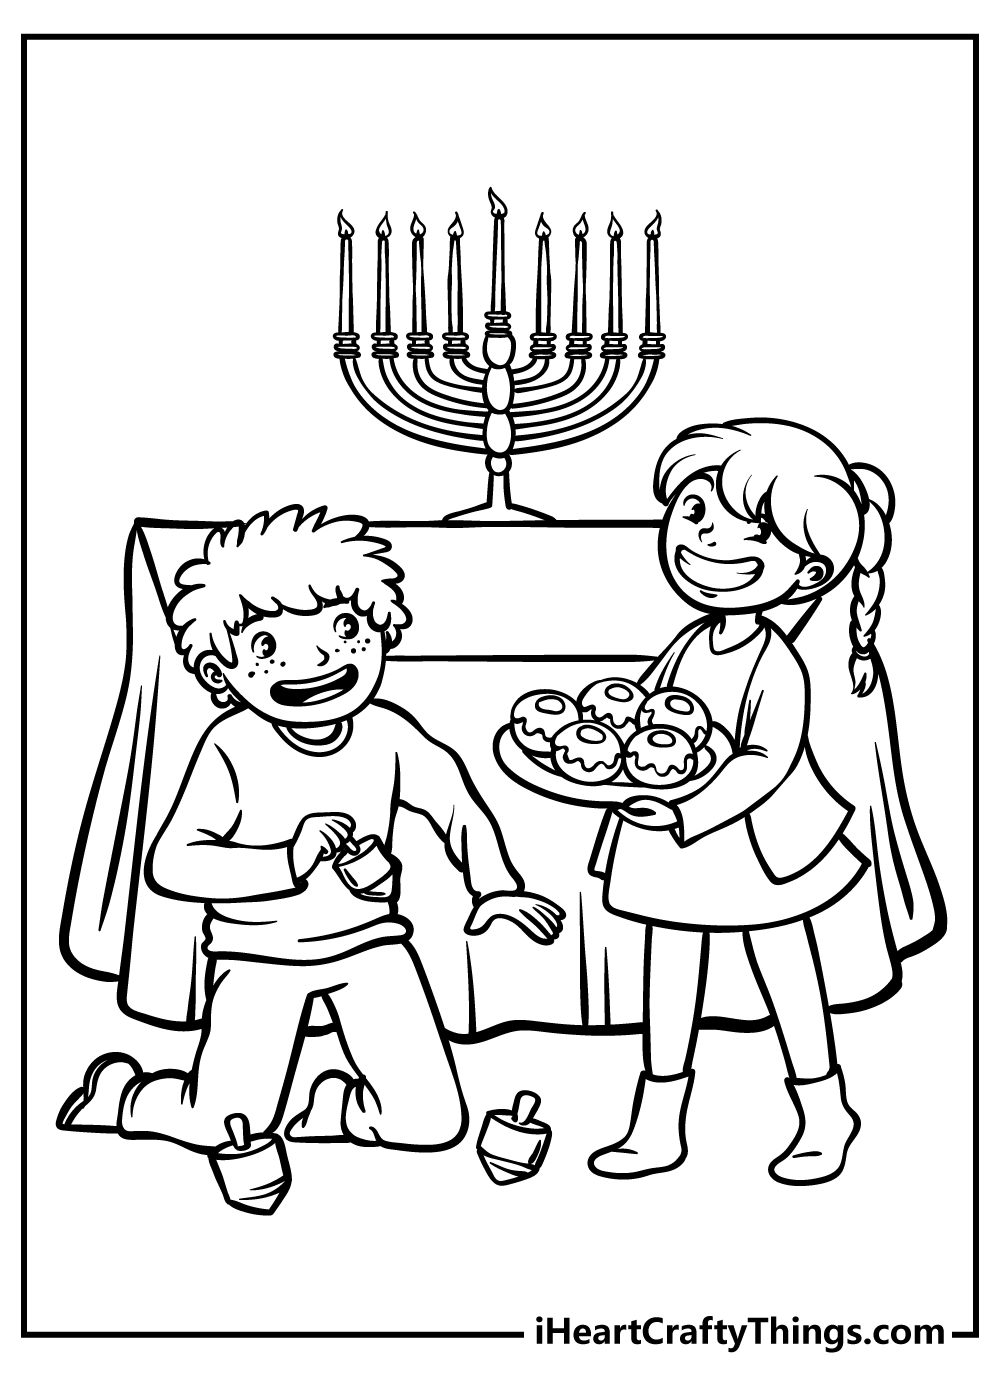 Hanukkah Coloring Pages for preschoolers free printable